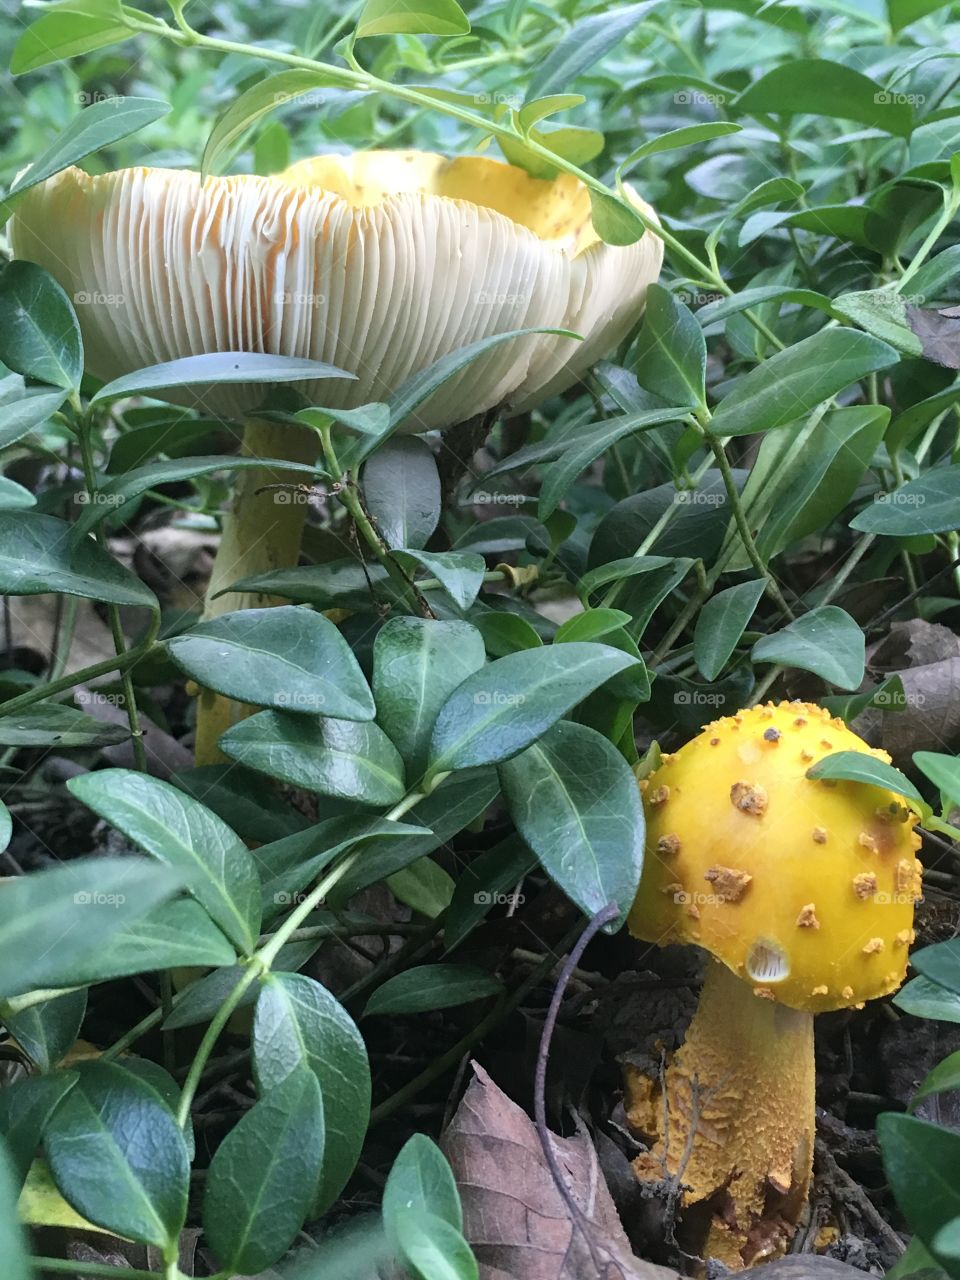 Mushroom with upturned gills alongside smaller yellow mushroom 